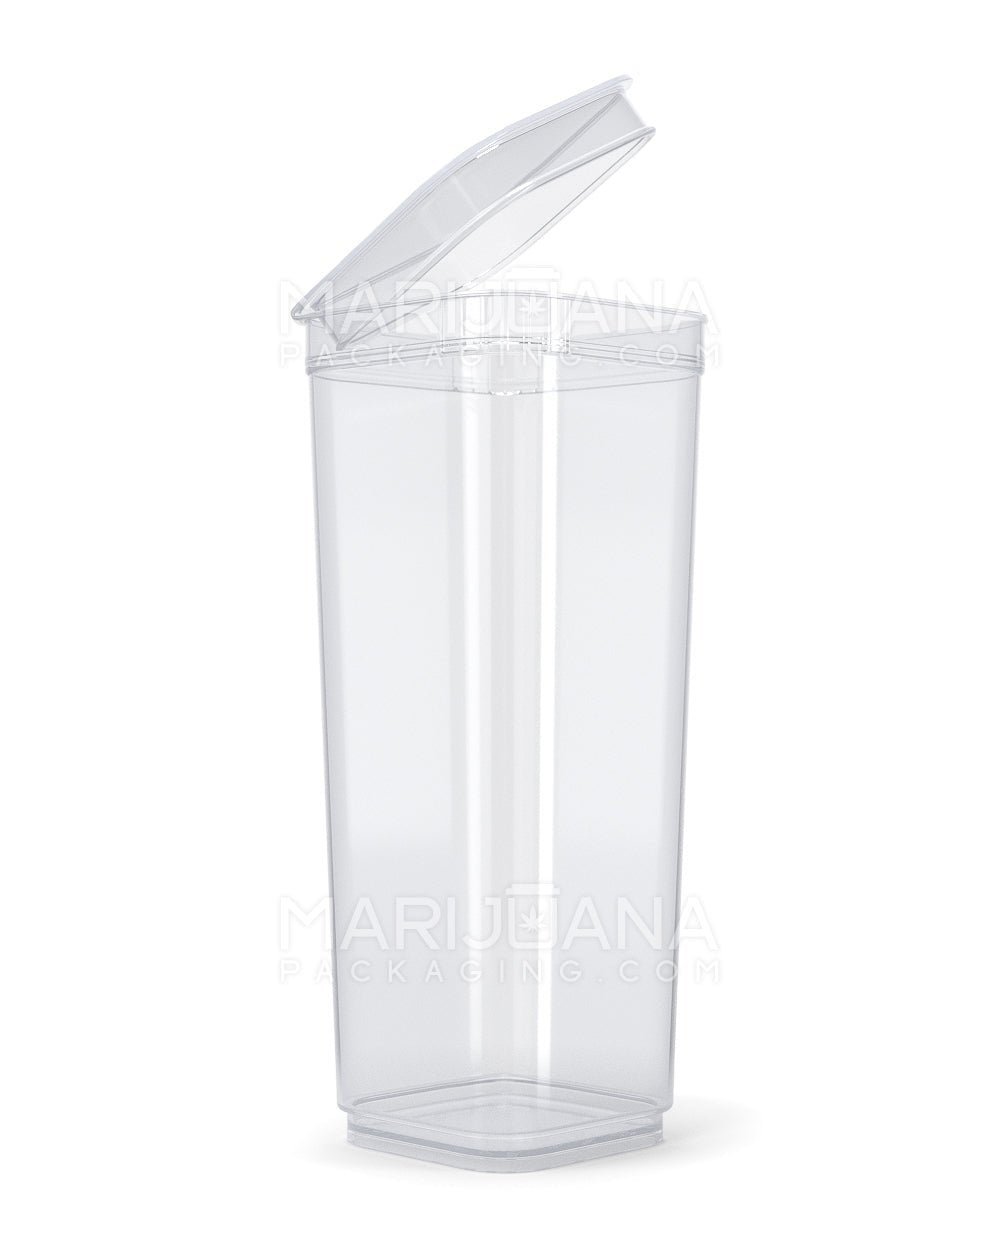 POLLEN GEAR | Child Resistant 100% Recyclable Transparent Clear Pop Box Pop Top Bottles | 60dr - 14g - 205 Count - 2